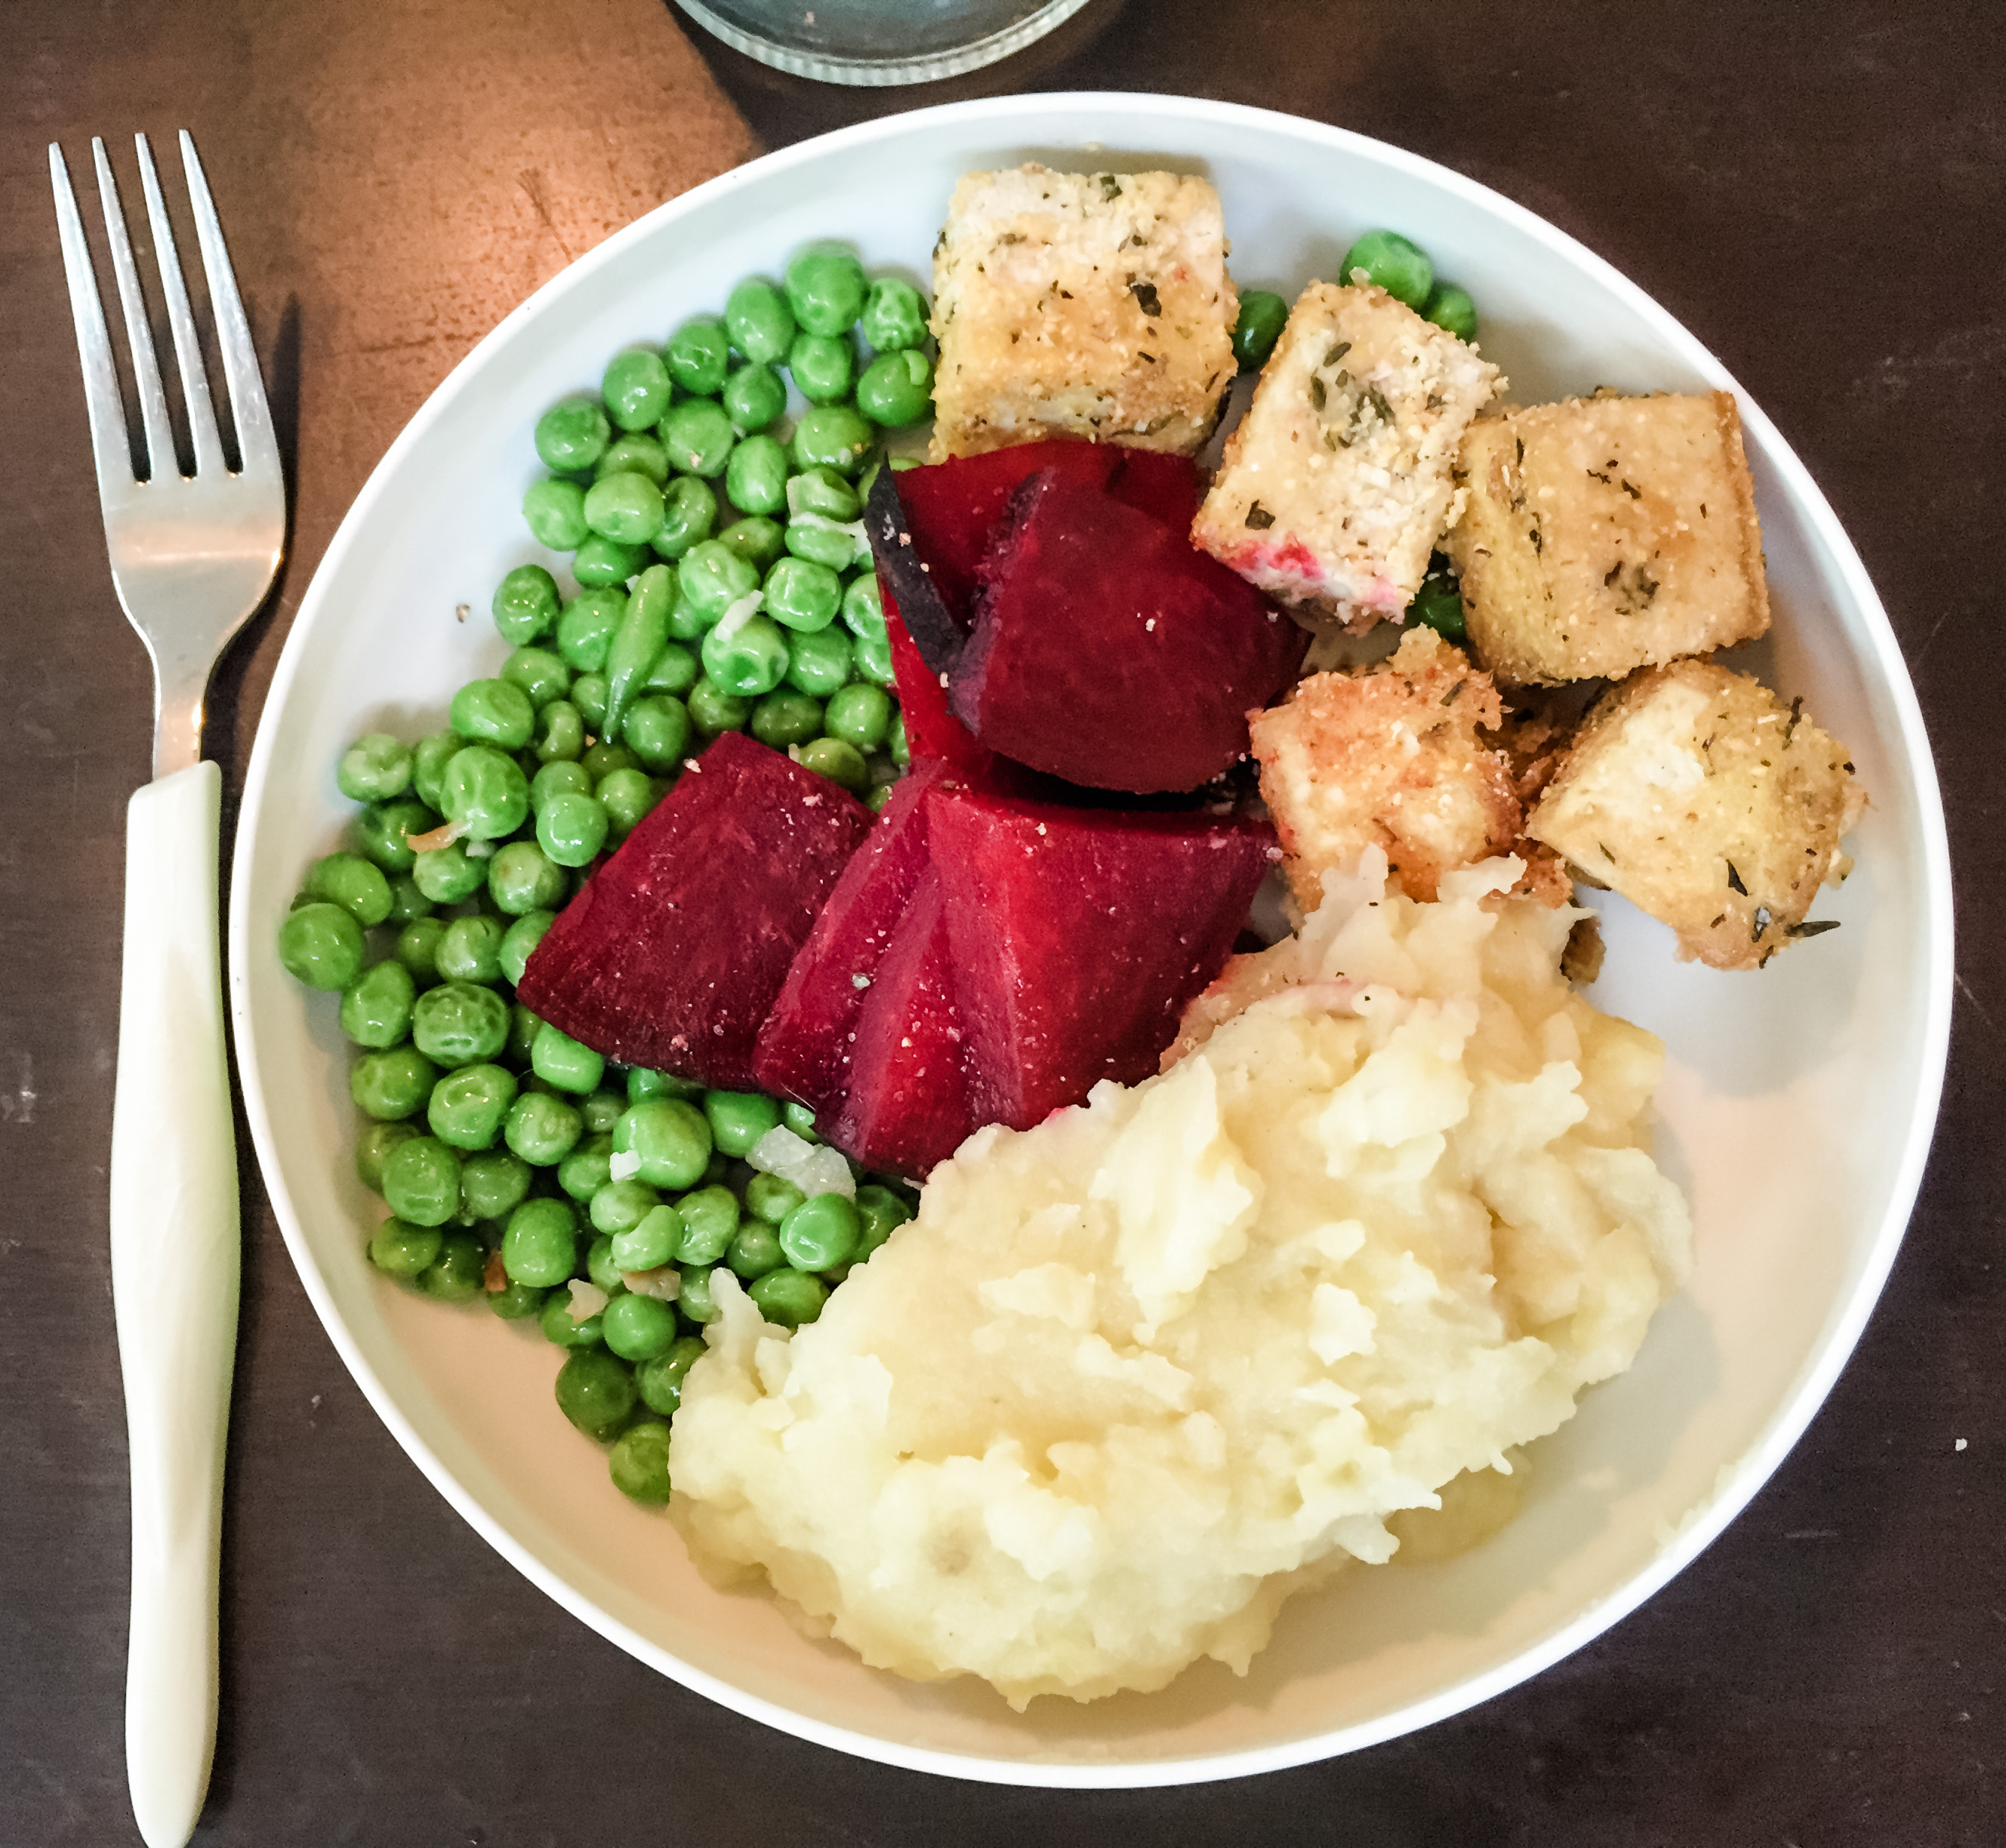 Vegan meal for baby: Crispy tofu, fresh peas, mashed potatoes, and beets